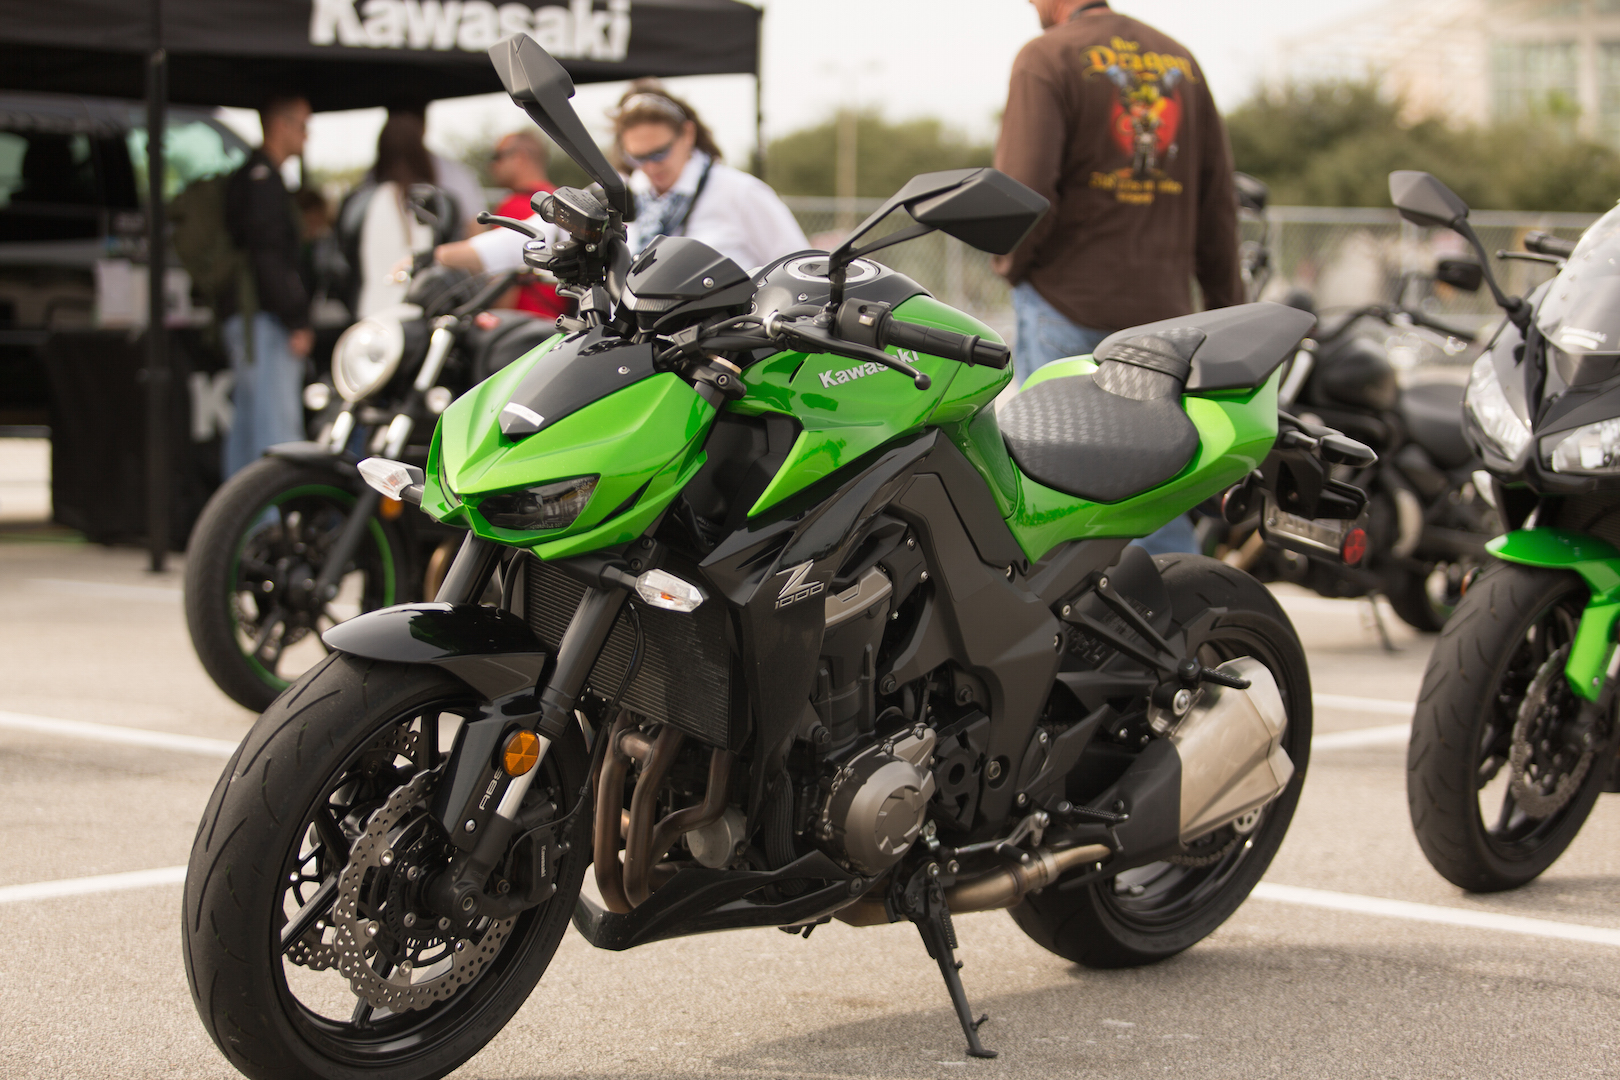 procedure Cape Paradis 2015 Kawasaki Z1000 ABS Test Ride AIM Expo Orlando 2015 — The CHomer